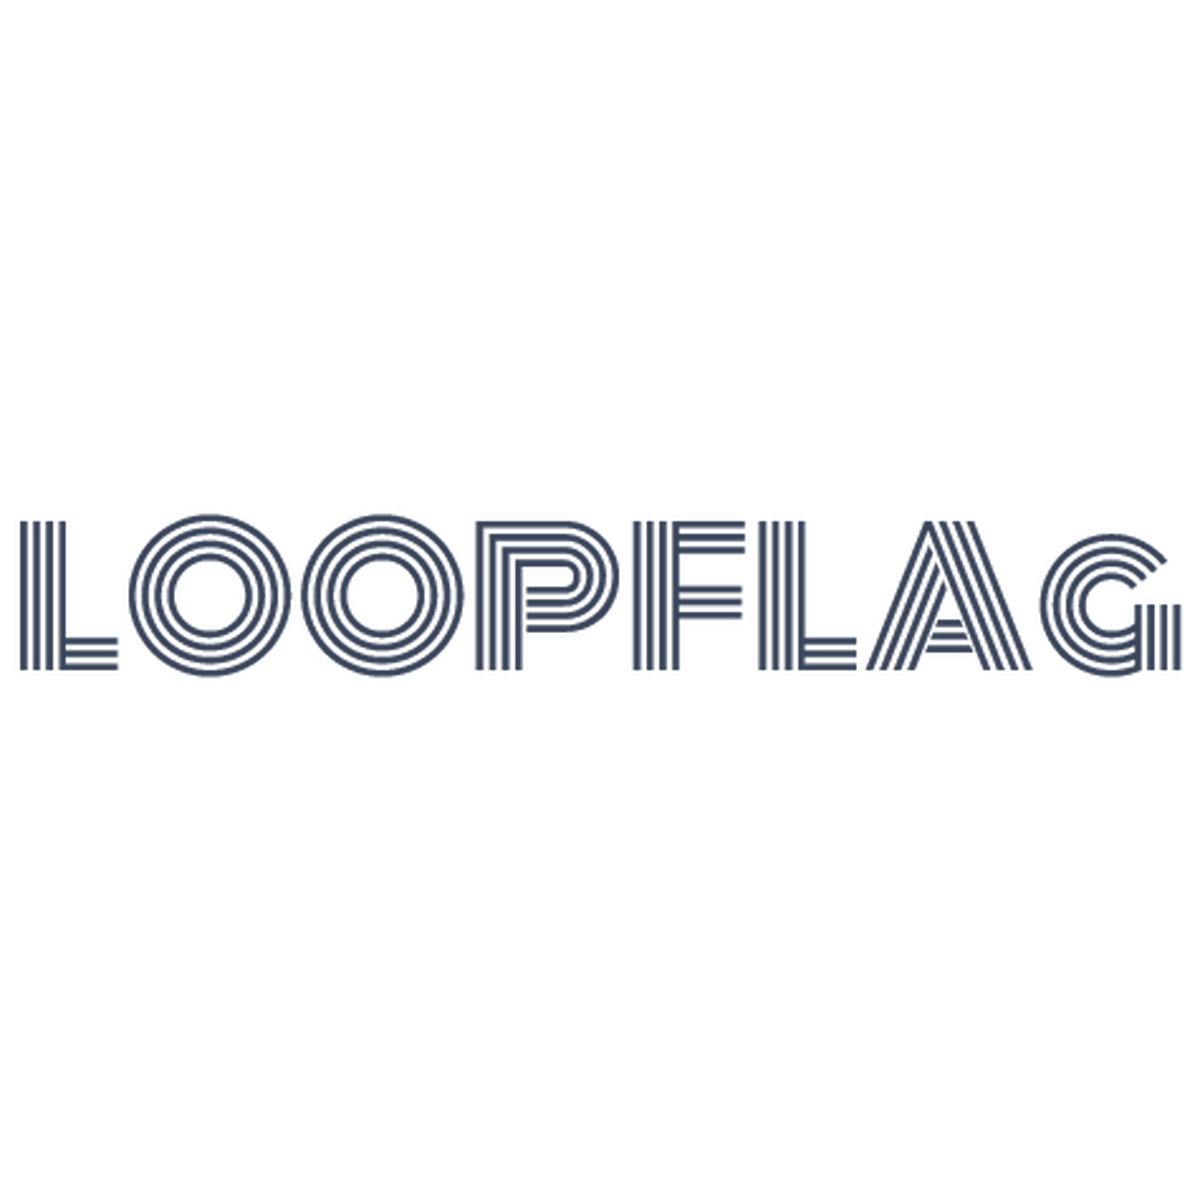 Loop Flag ループフラッグ ウェディング 両親贈呈品 ウェルカムボード プチギフト